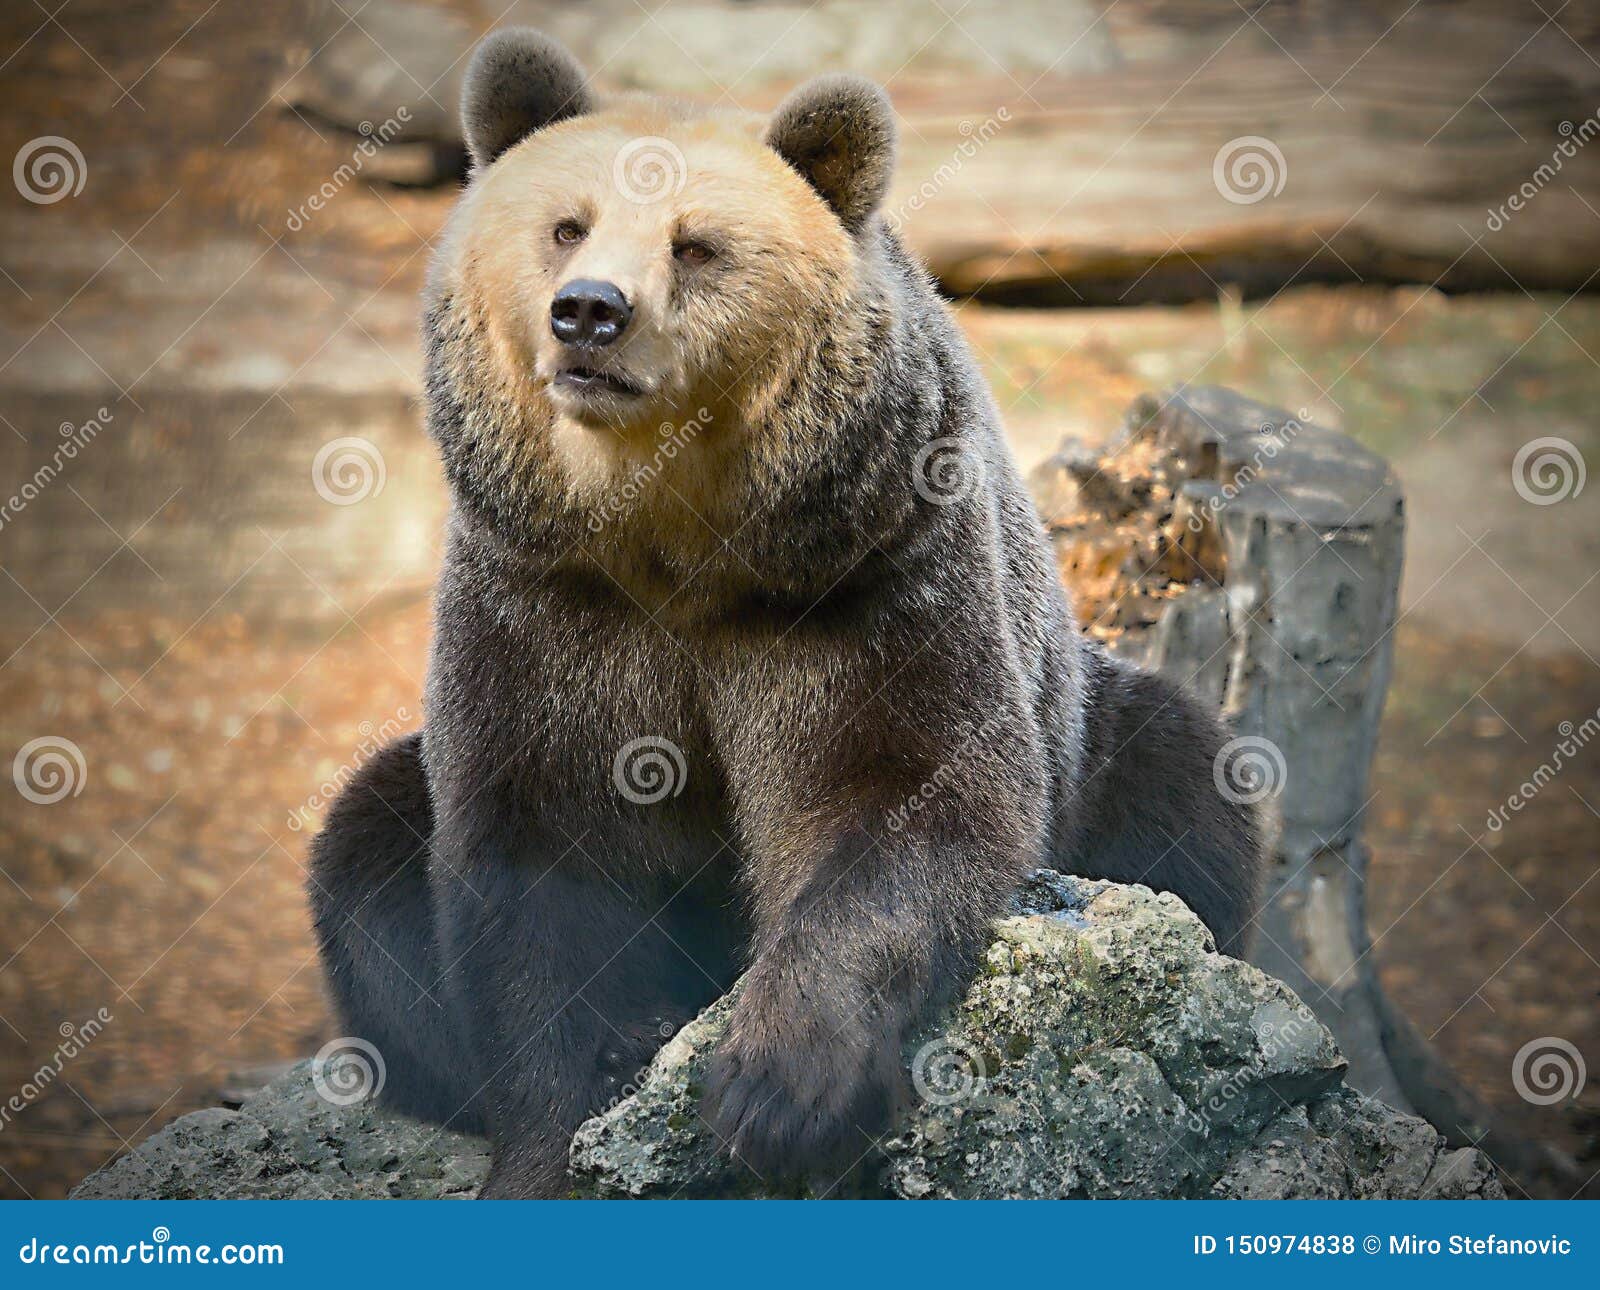 bears in zoo-bears are carnivoran mammals of the family ursidae